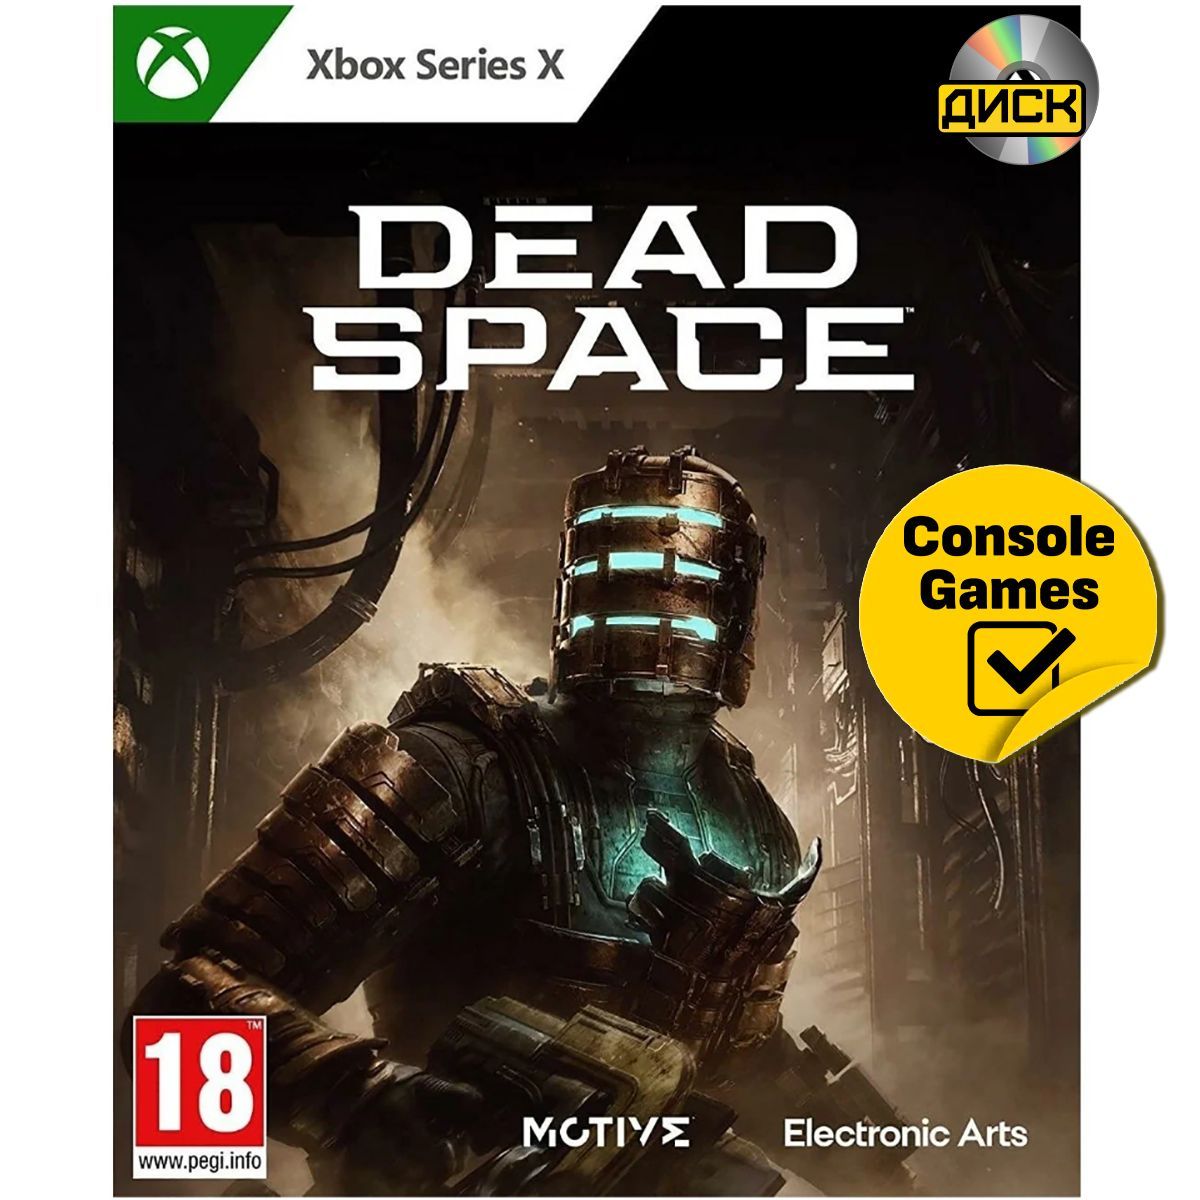 Dead space игра 2008 отзывы. Dead Space Remake Xbox.